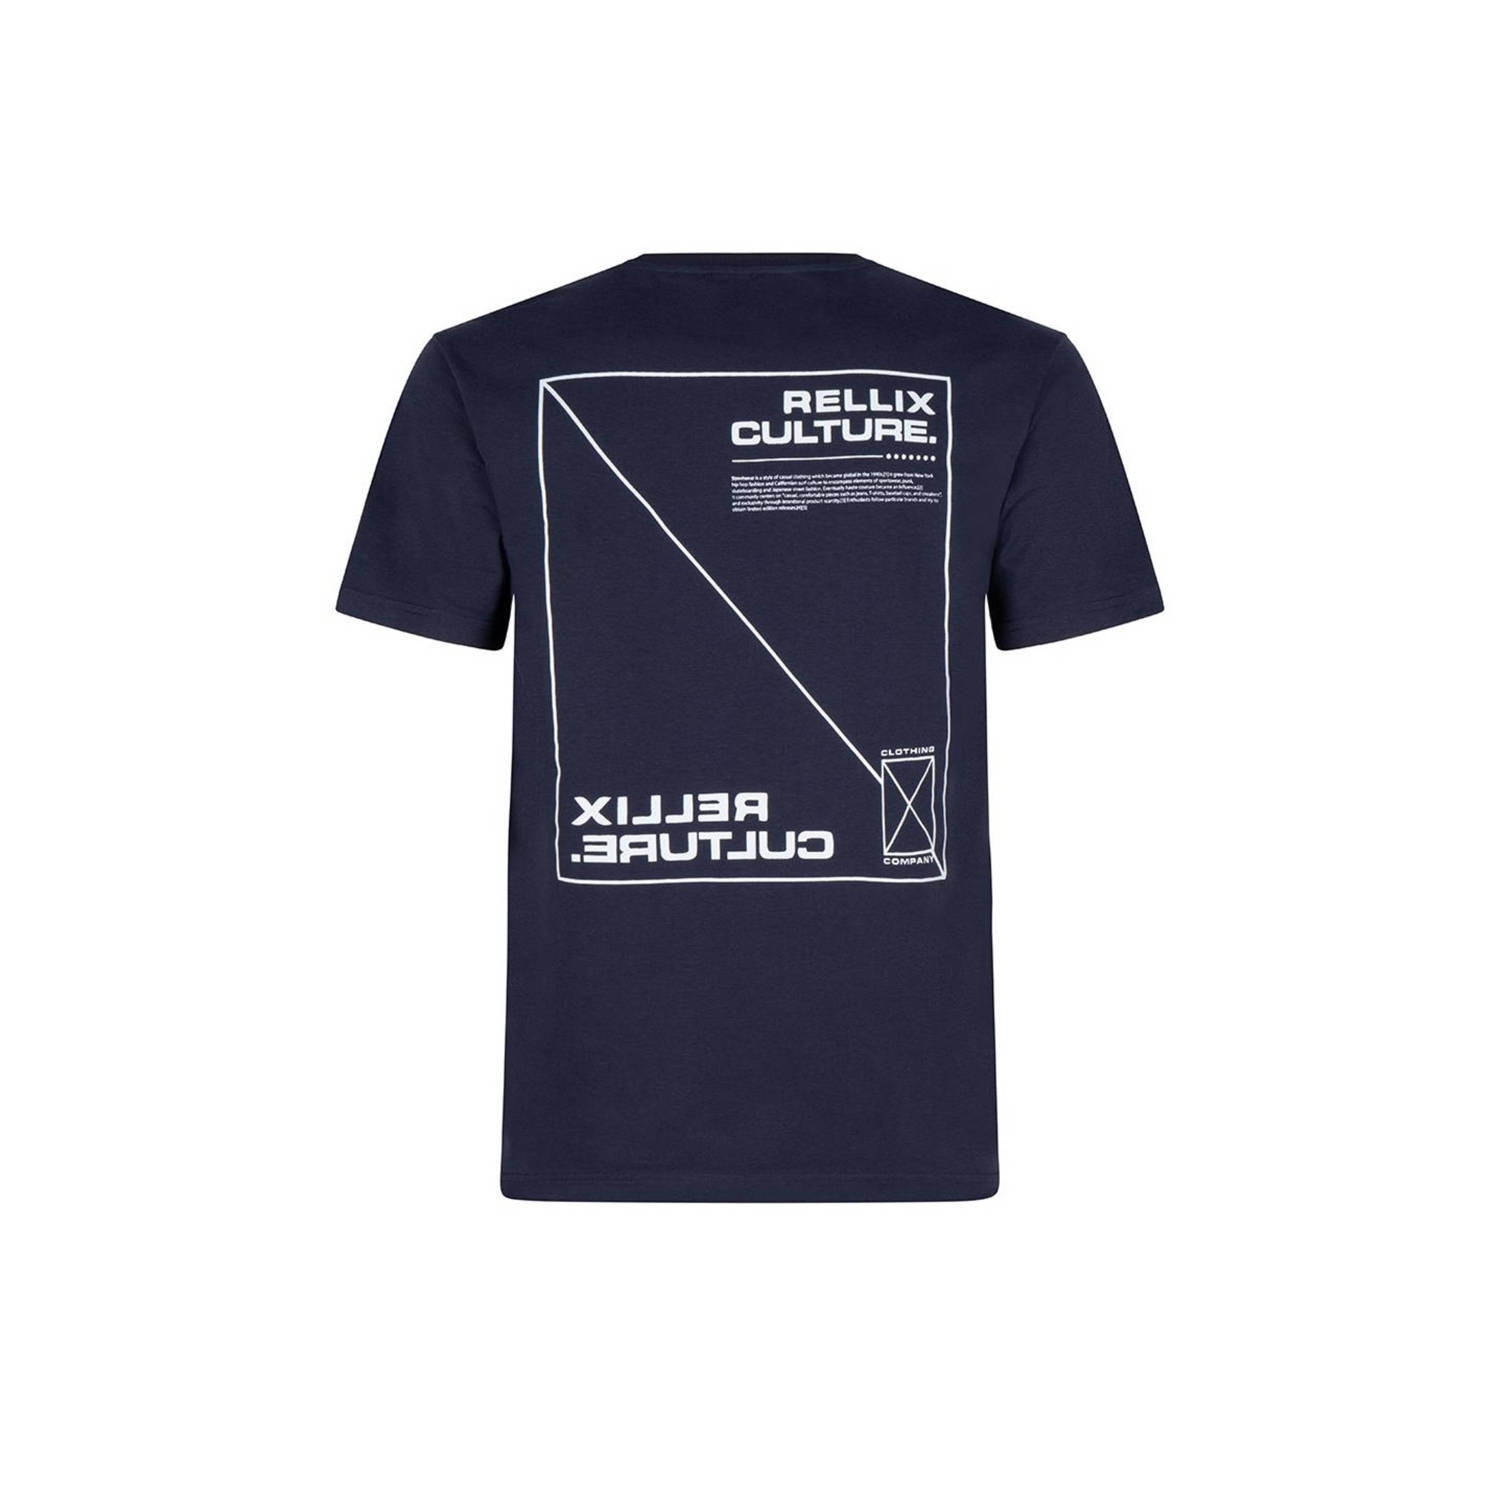 Rellix T-shirt met backprint donkerblauw